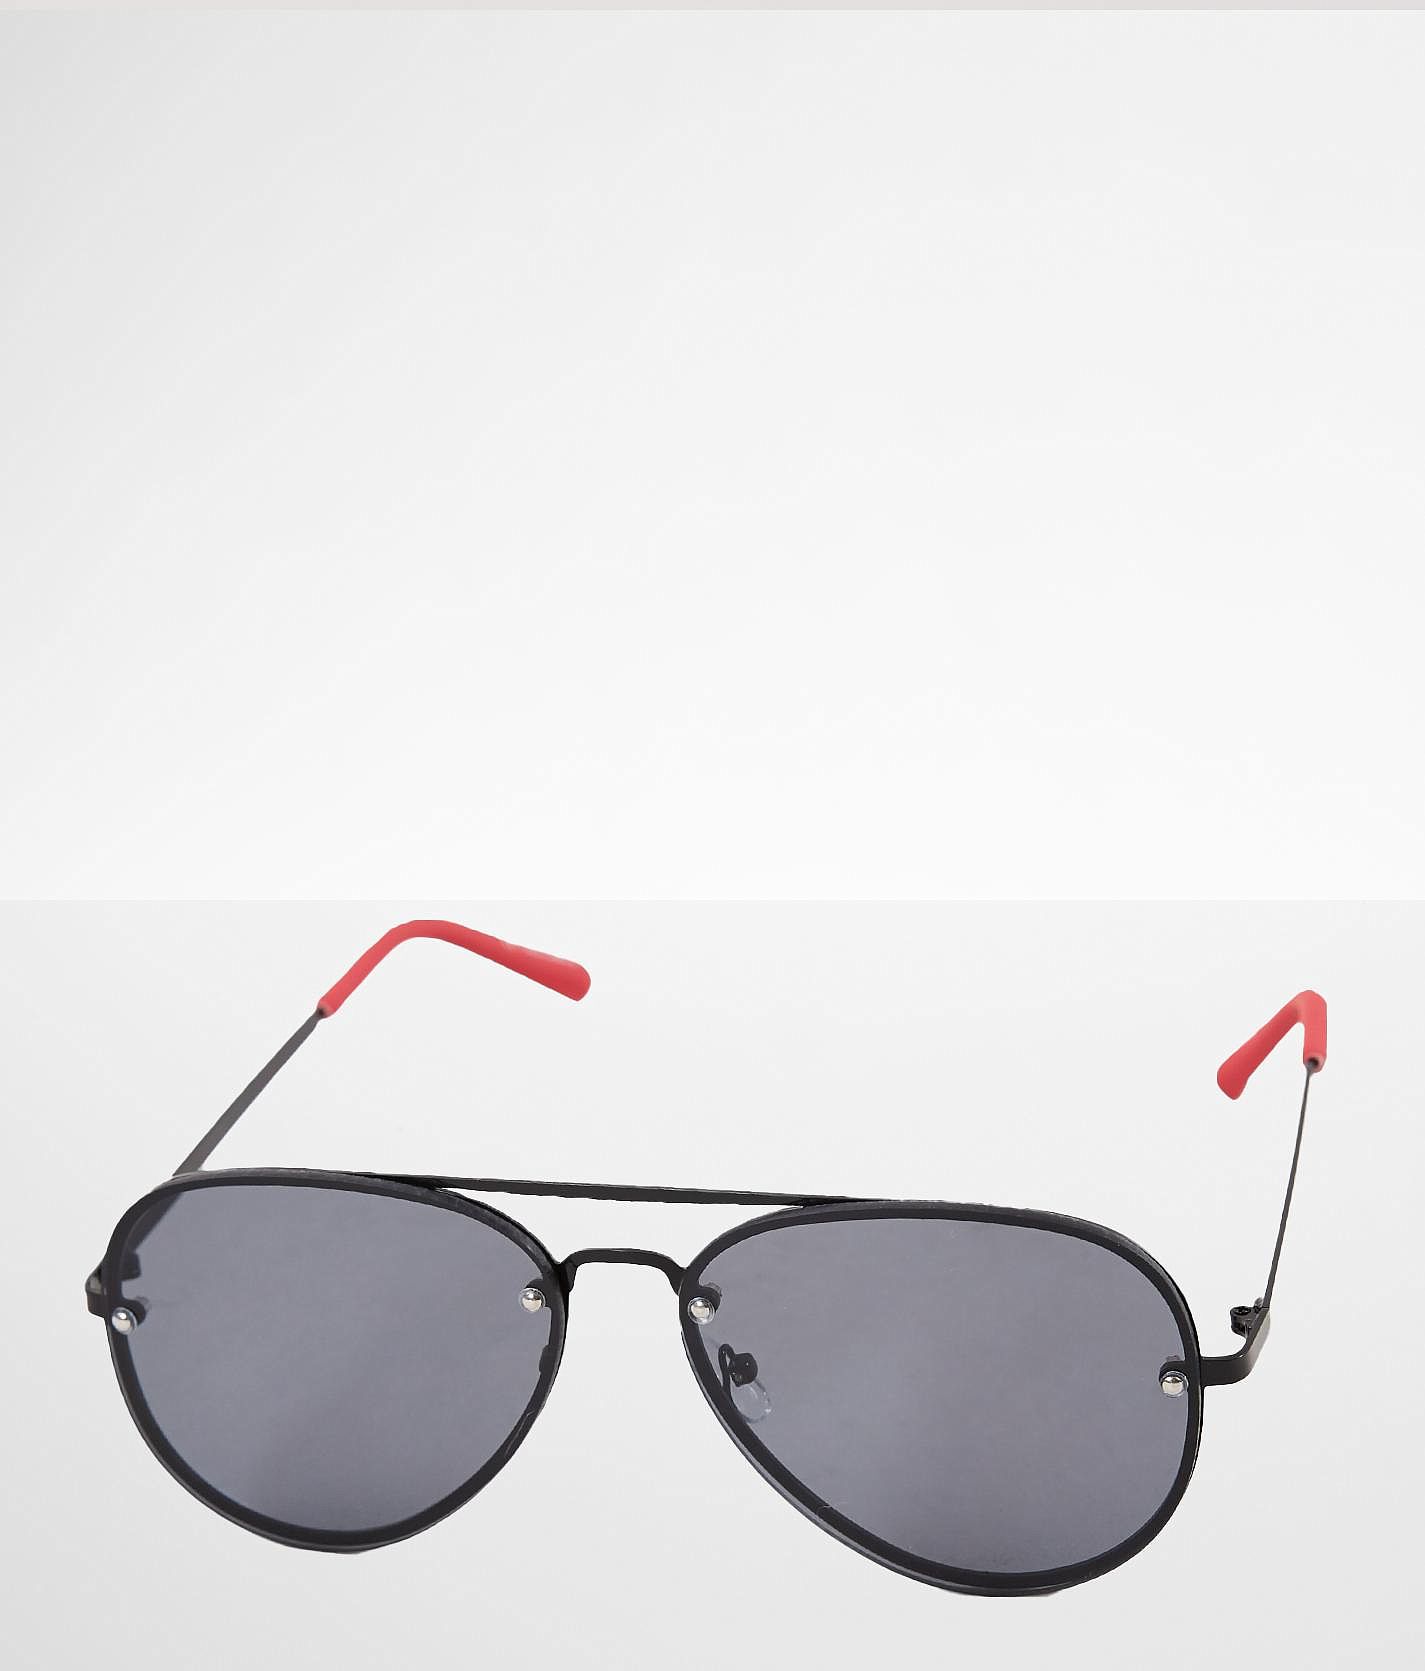 Bke Contrast Stem Aviator Sunglasses - Black , Men's